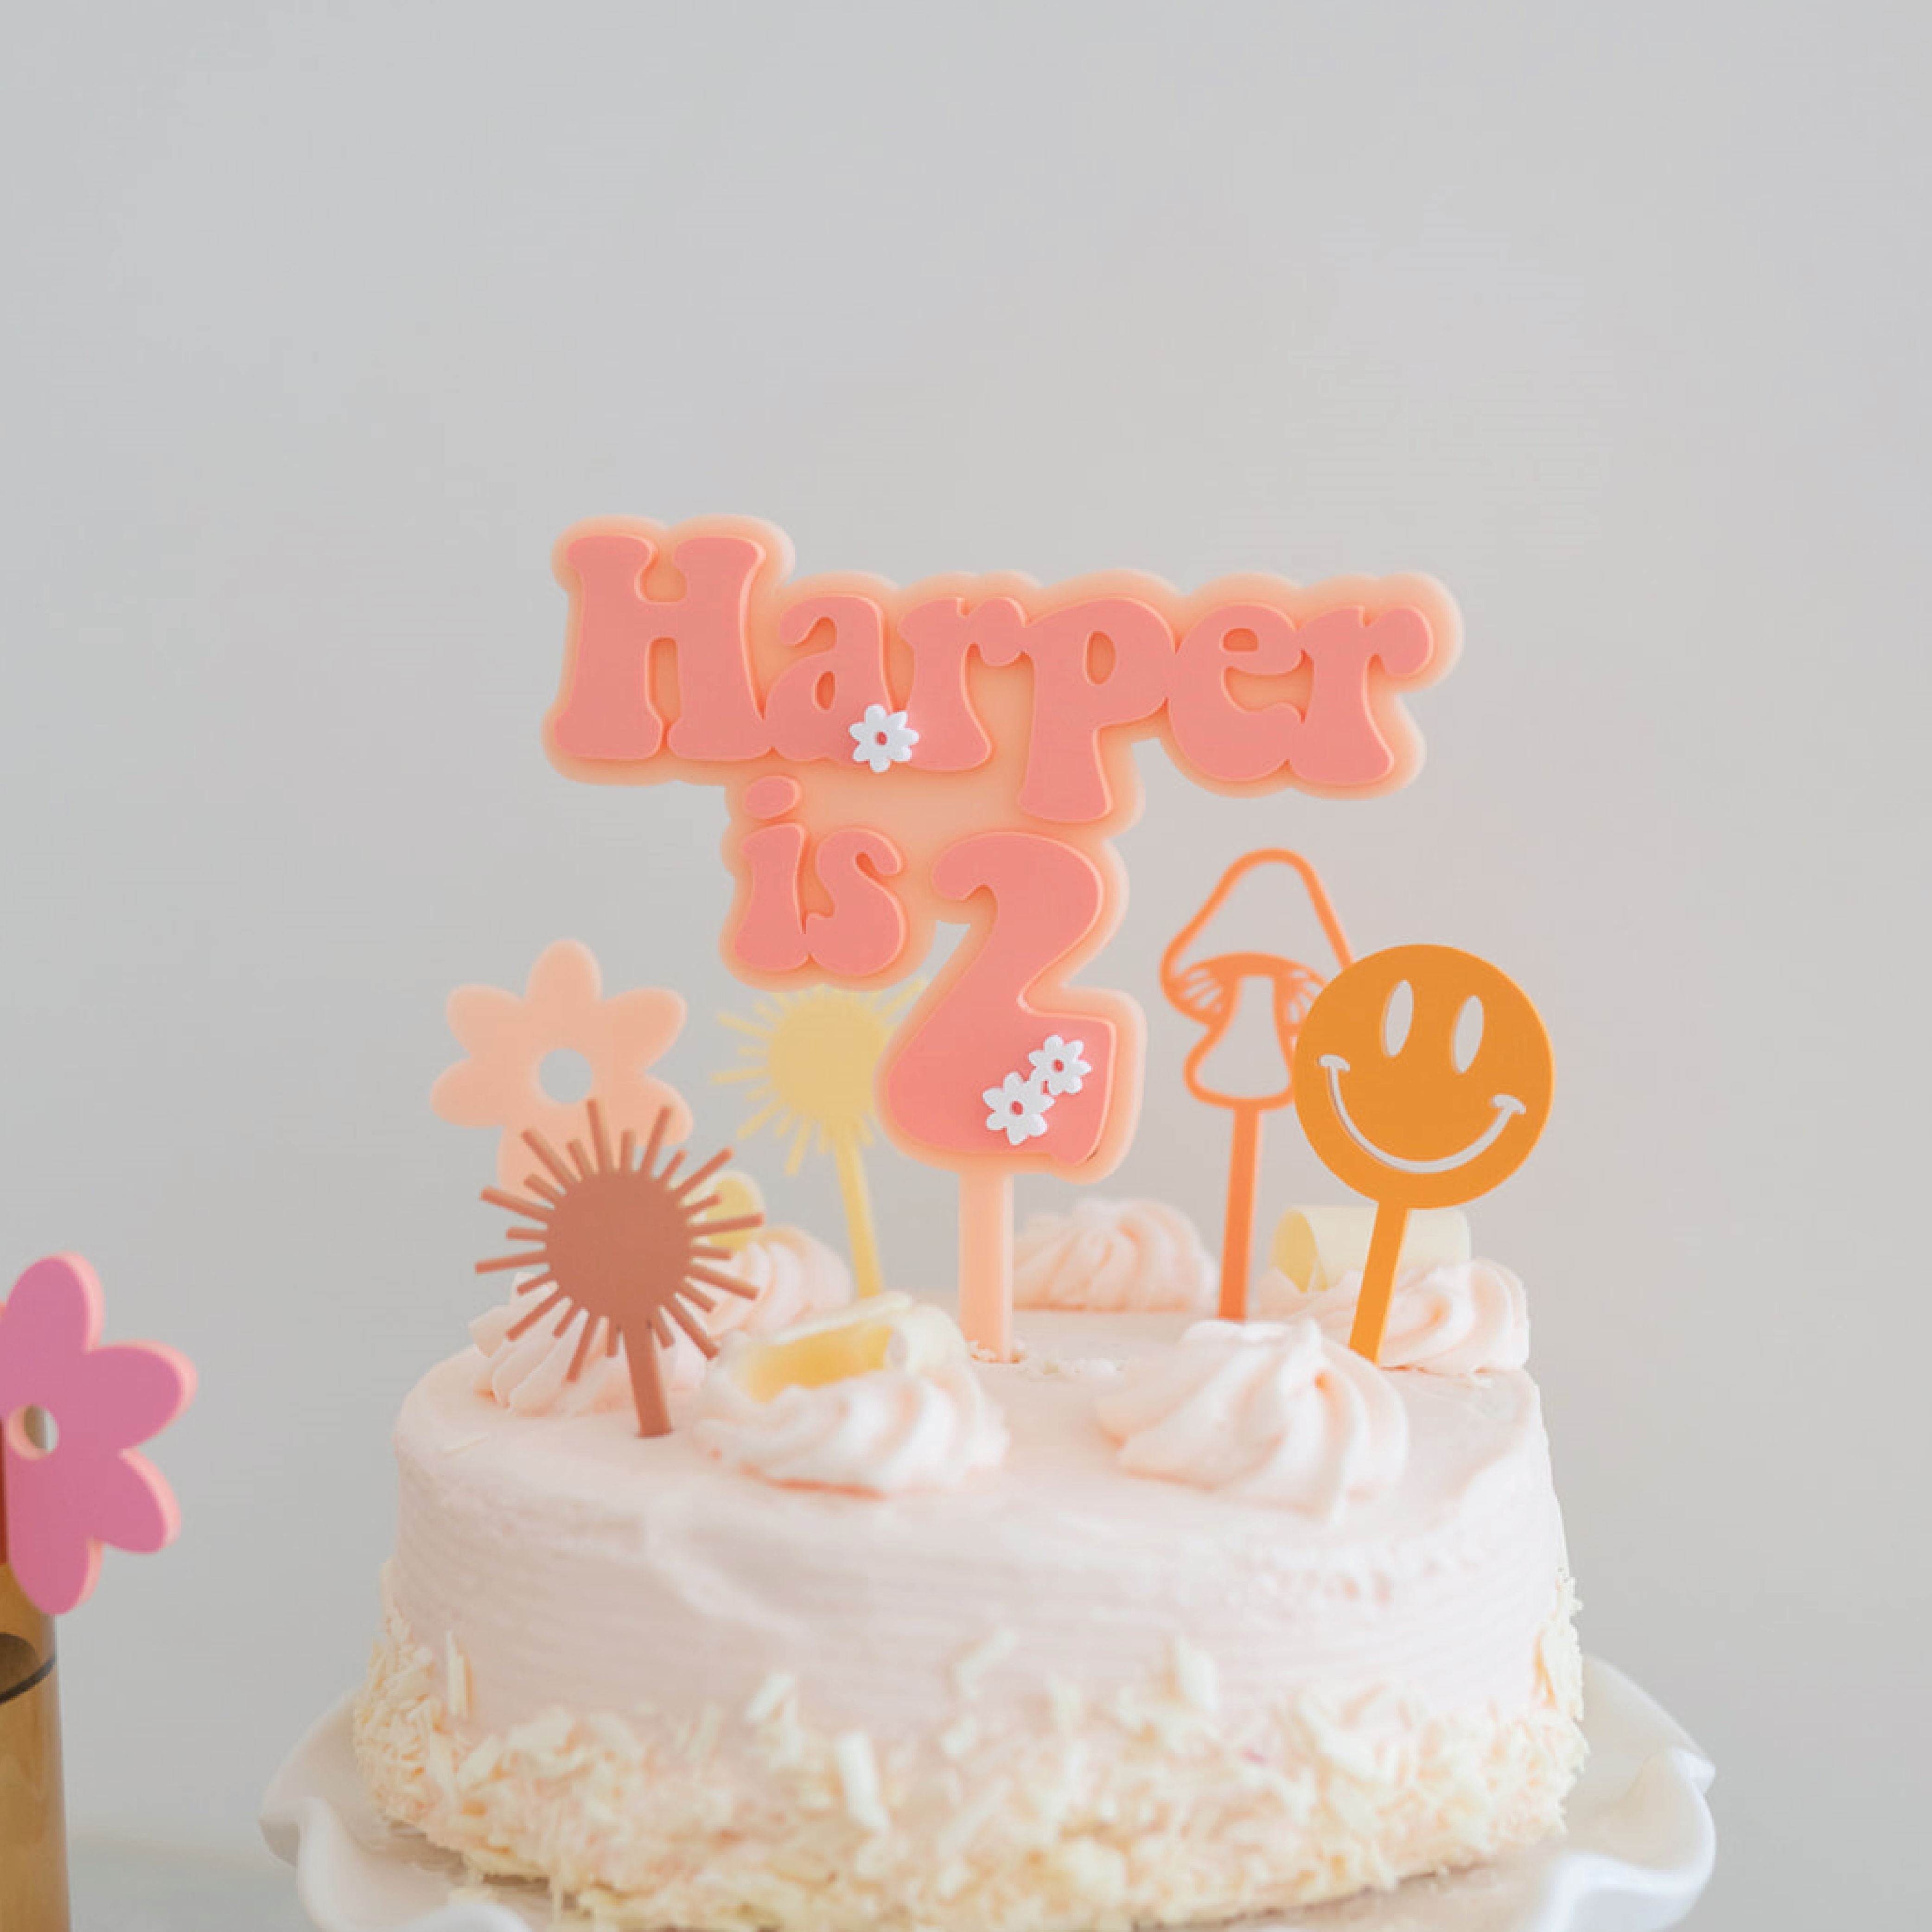 Happy Birthday Acrylic Cake Topper – The Cake Bake Shop®